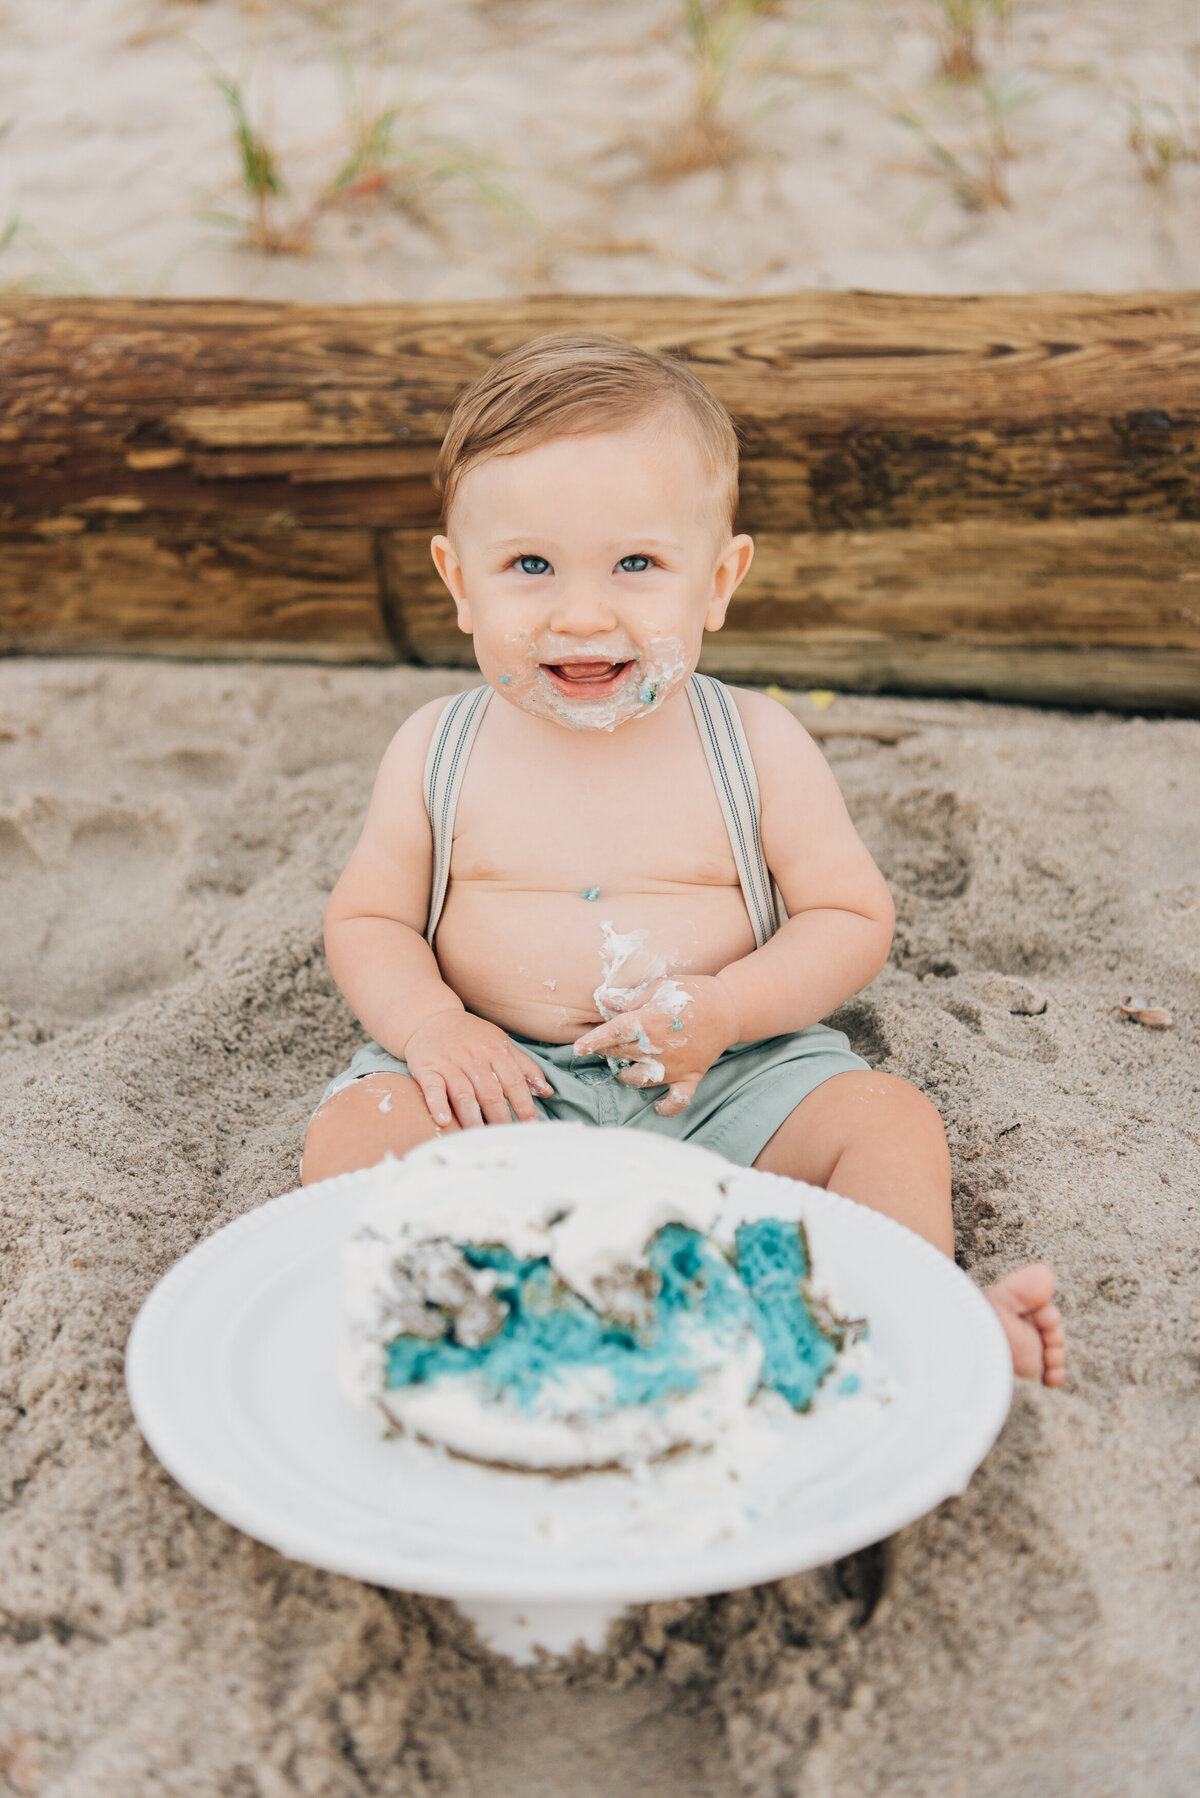 Baby eating cake on beach